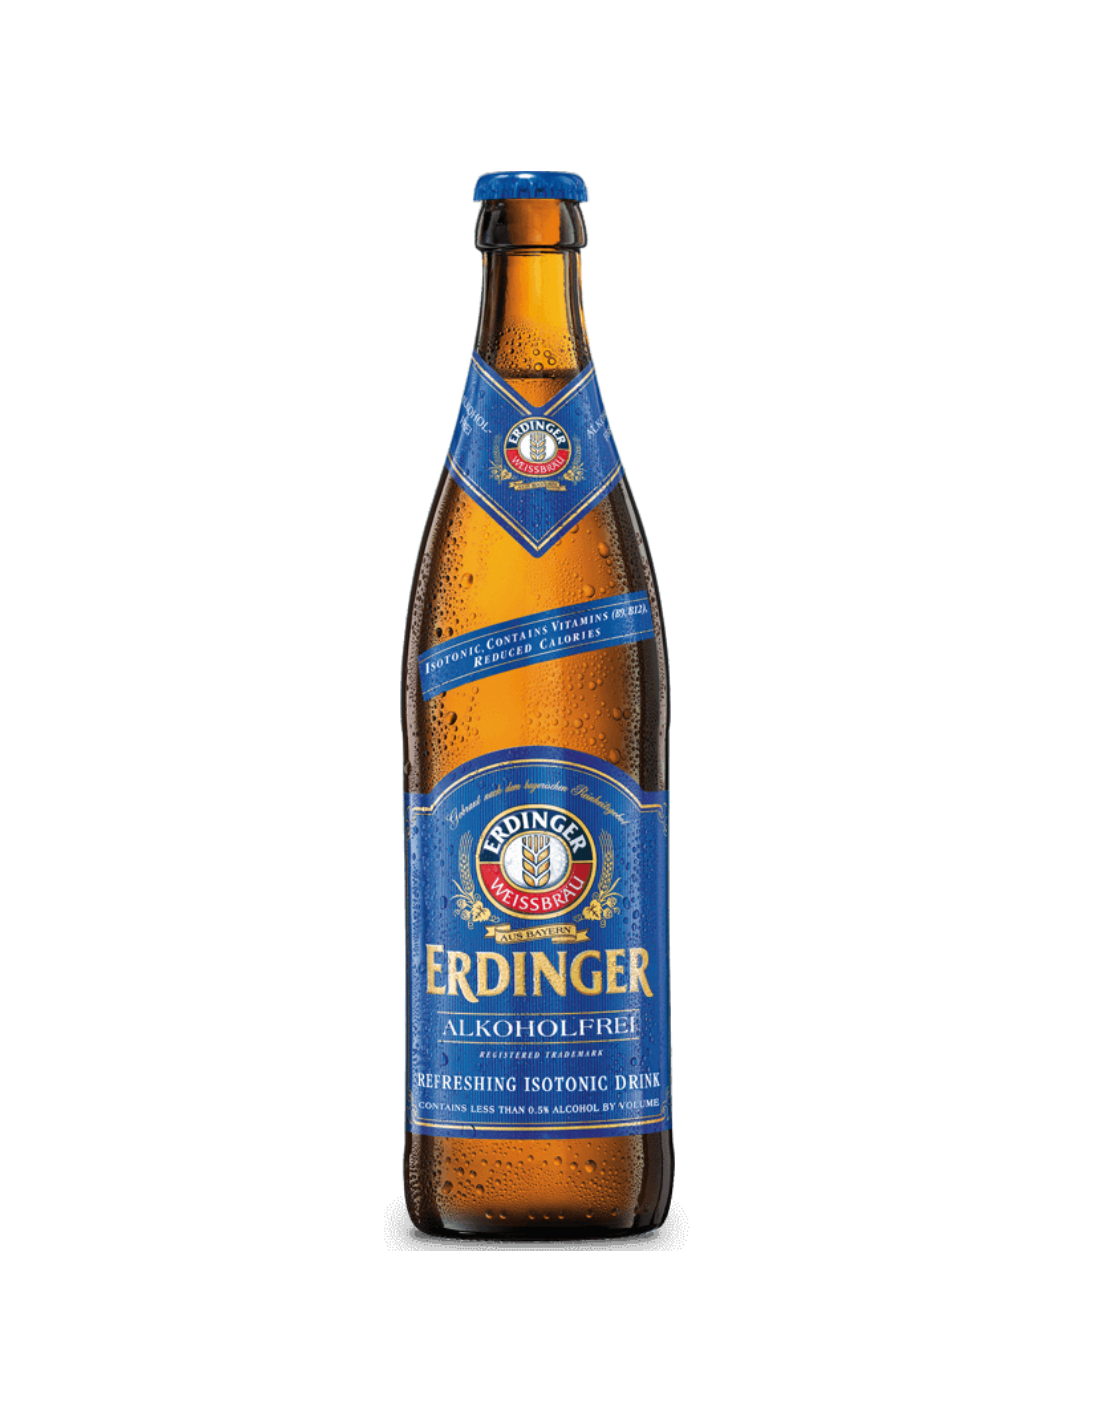 Bere blonda Erdinger fara alcool, 0.5L, sticla, Germania alcooldiscount.ro